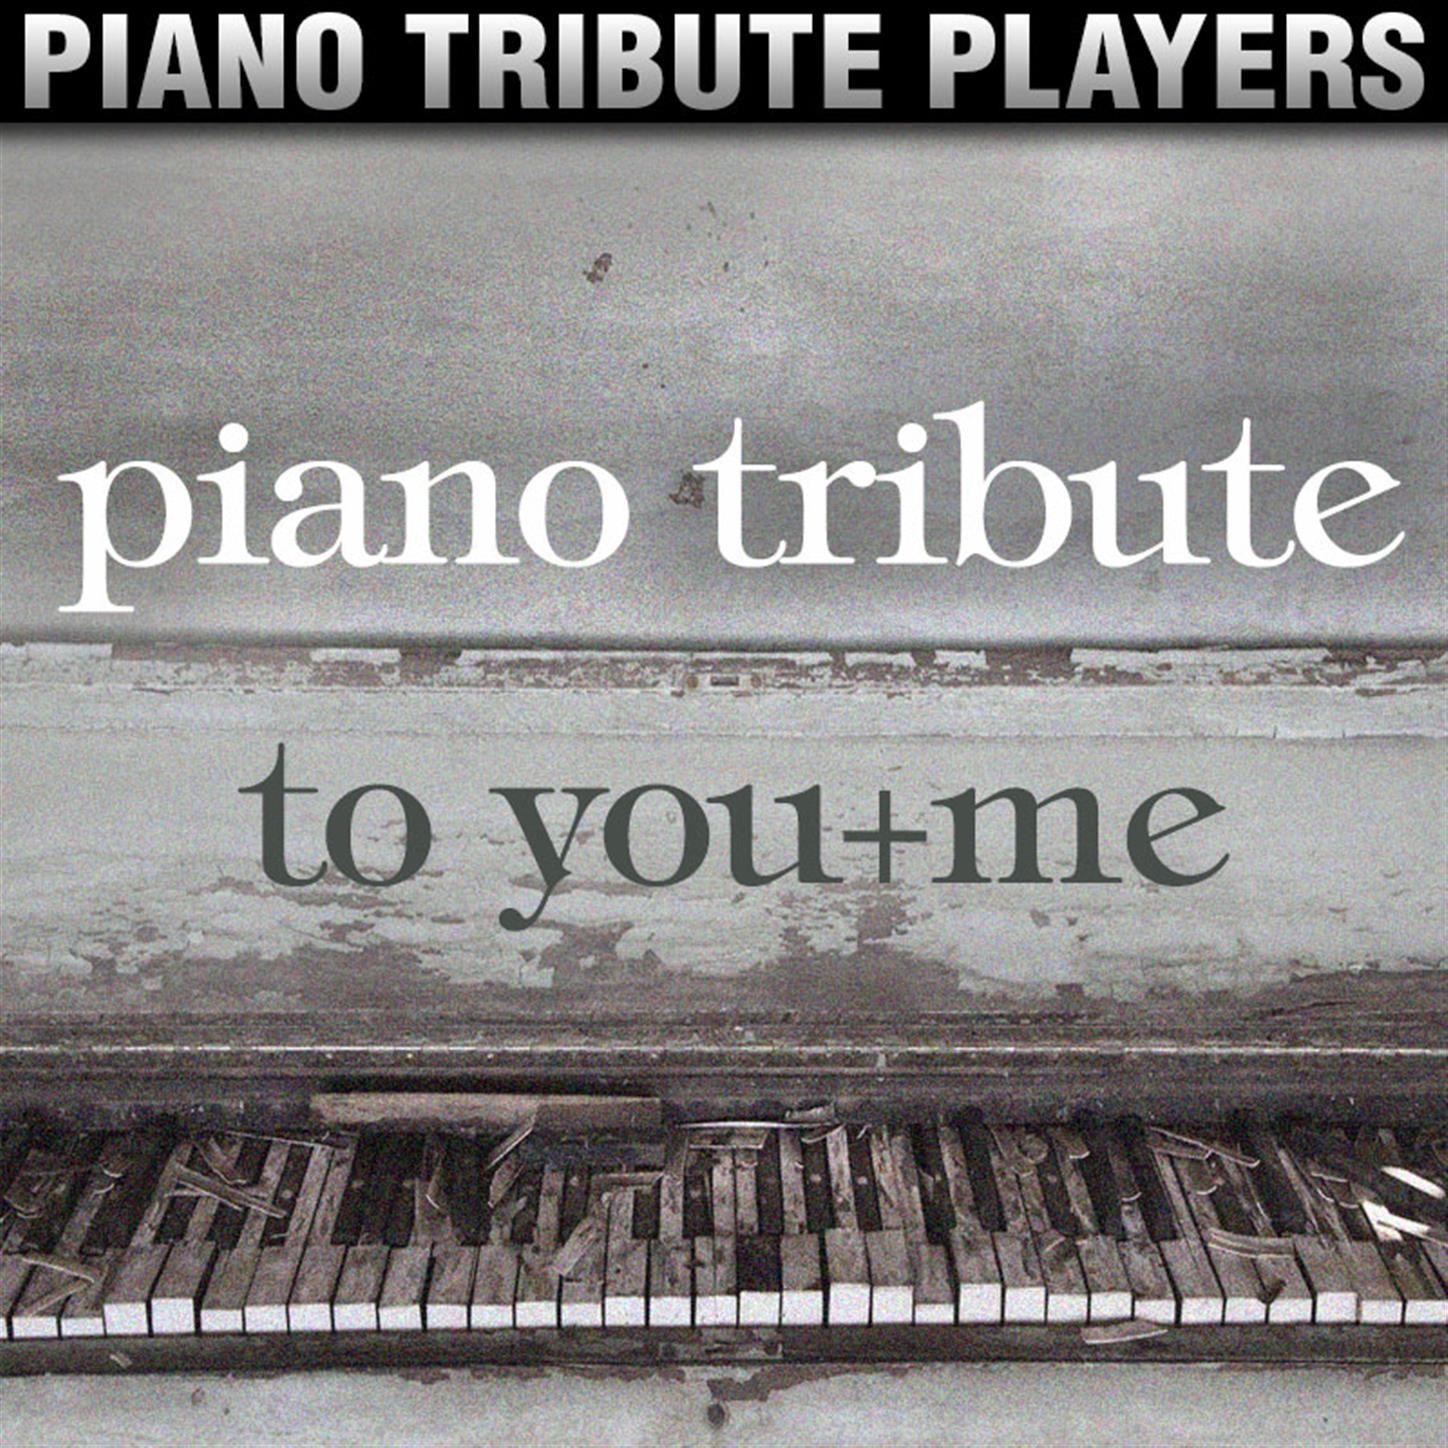 Piano Tribute to You+Me